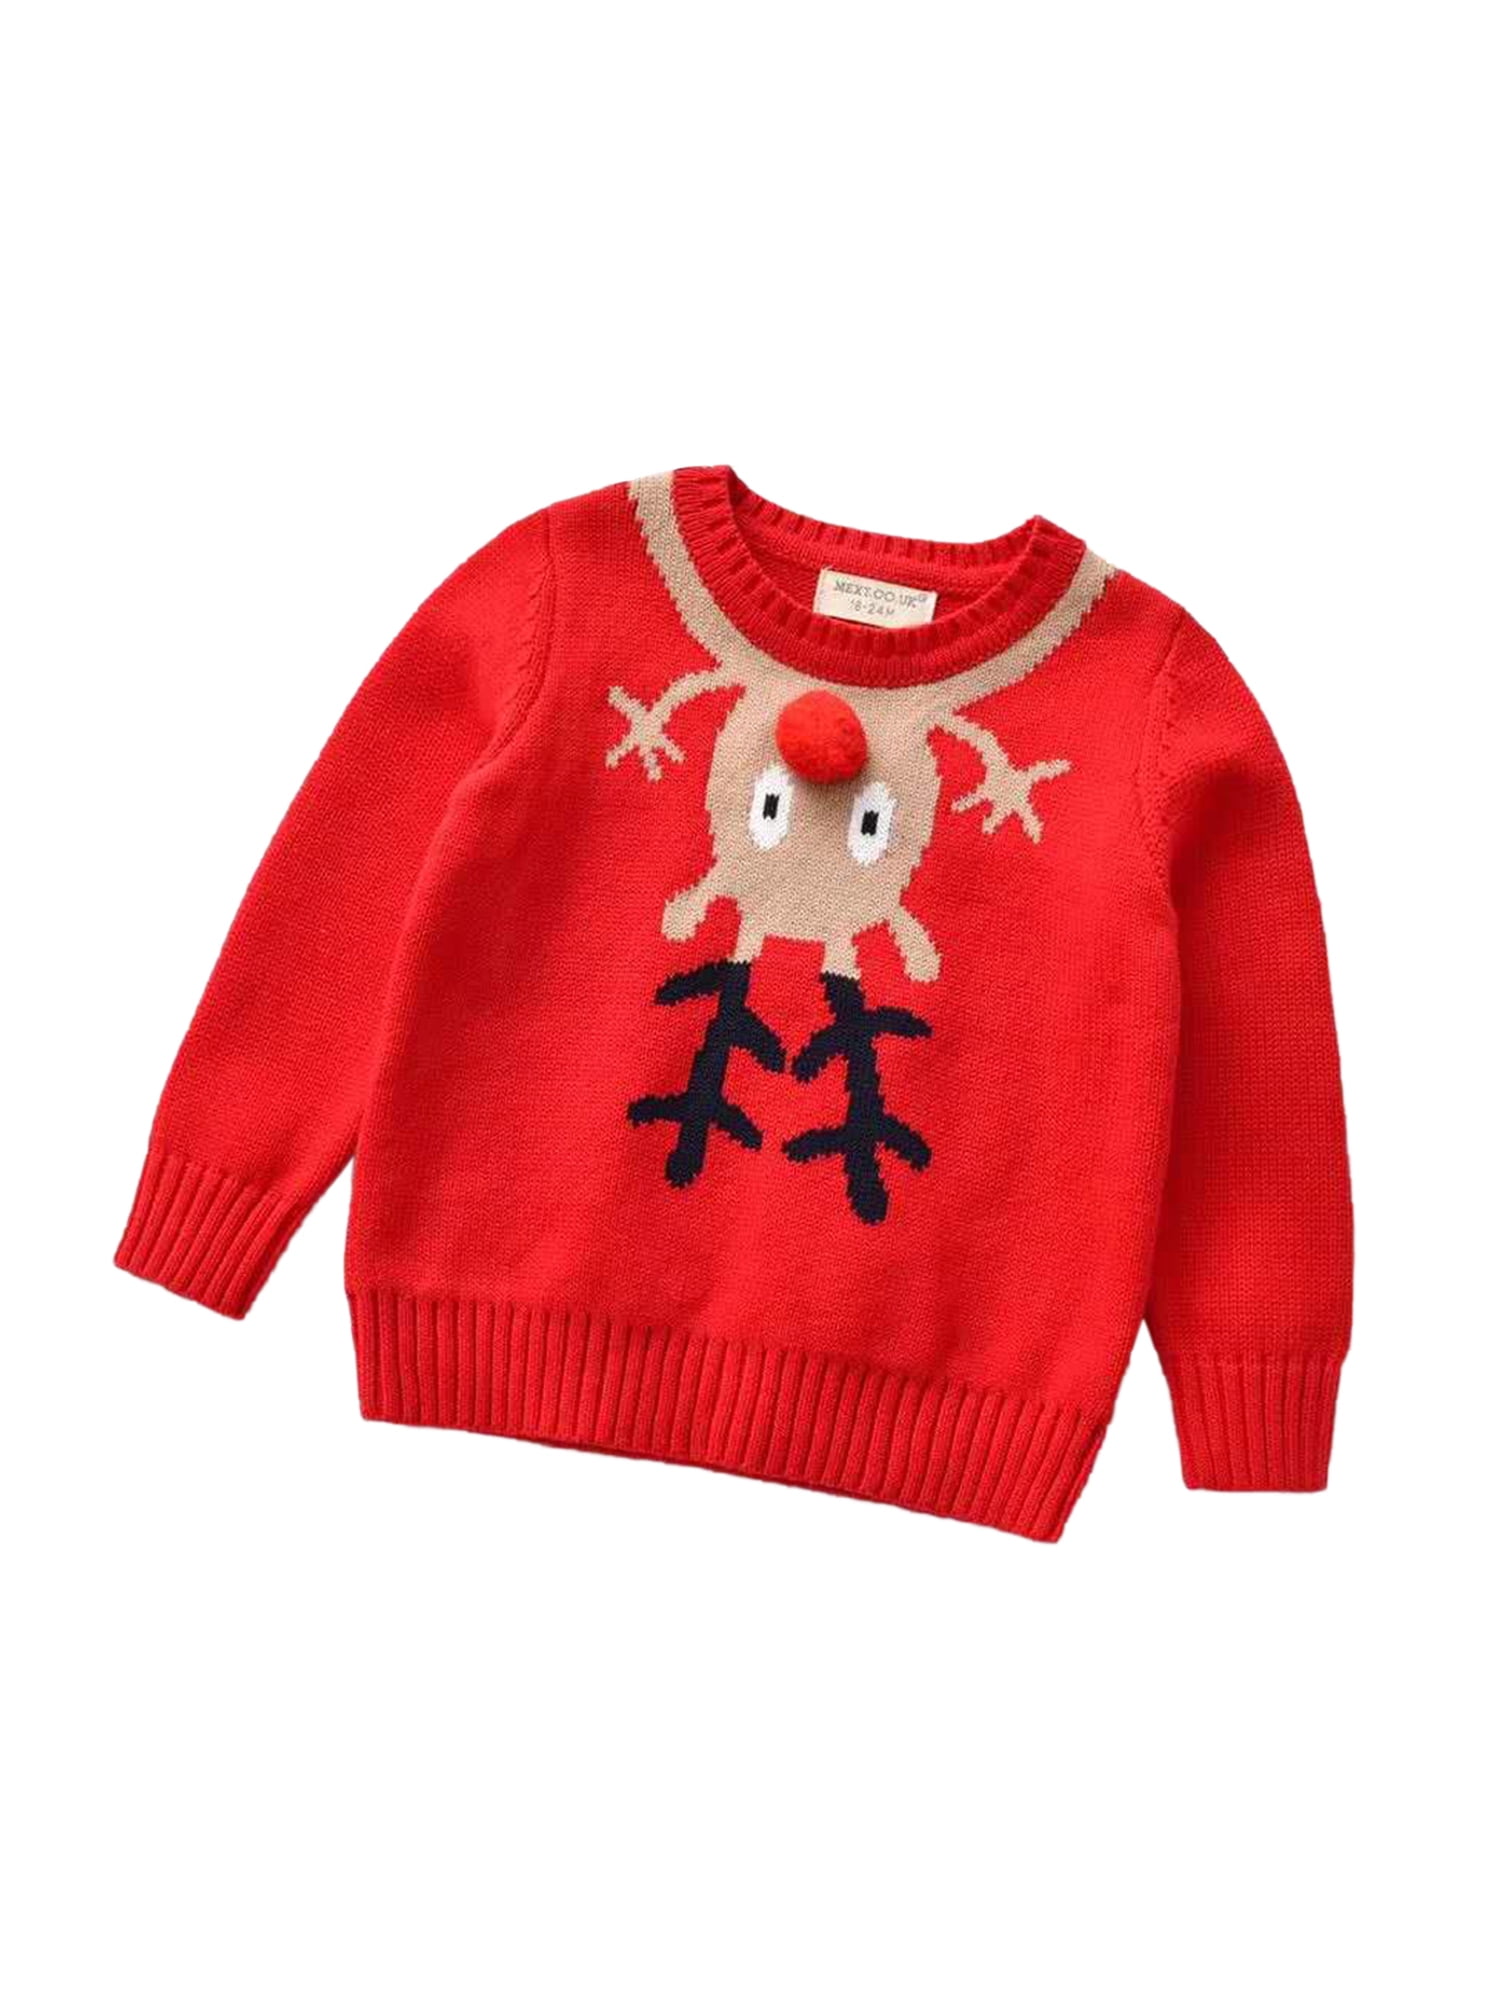 Boy Cardigan Autumn Sweater Toddler Kid Long Sleeve Cartoon Knitted Top Clothing